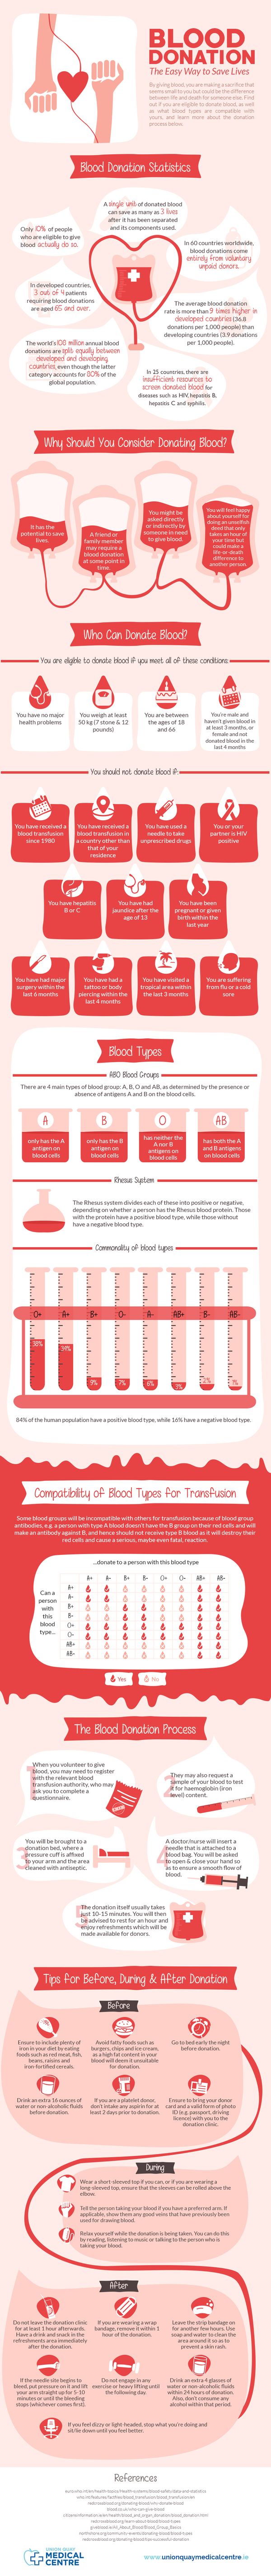 Union Quay - Blood Donation infographic